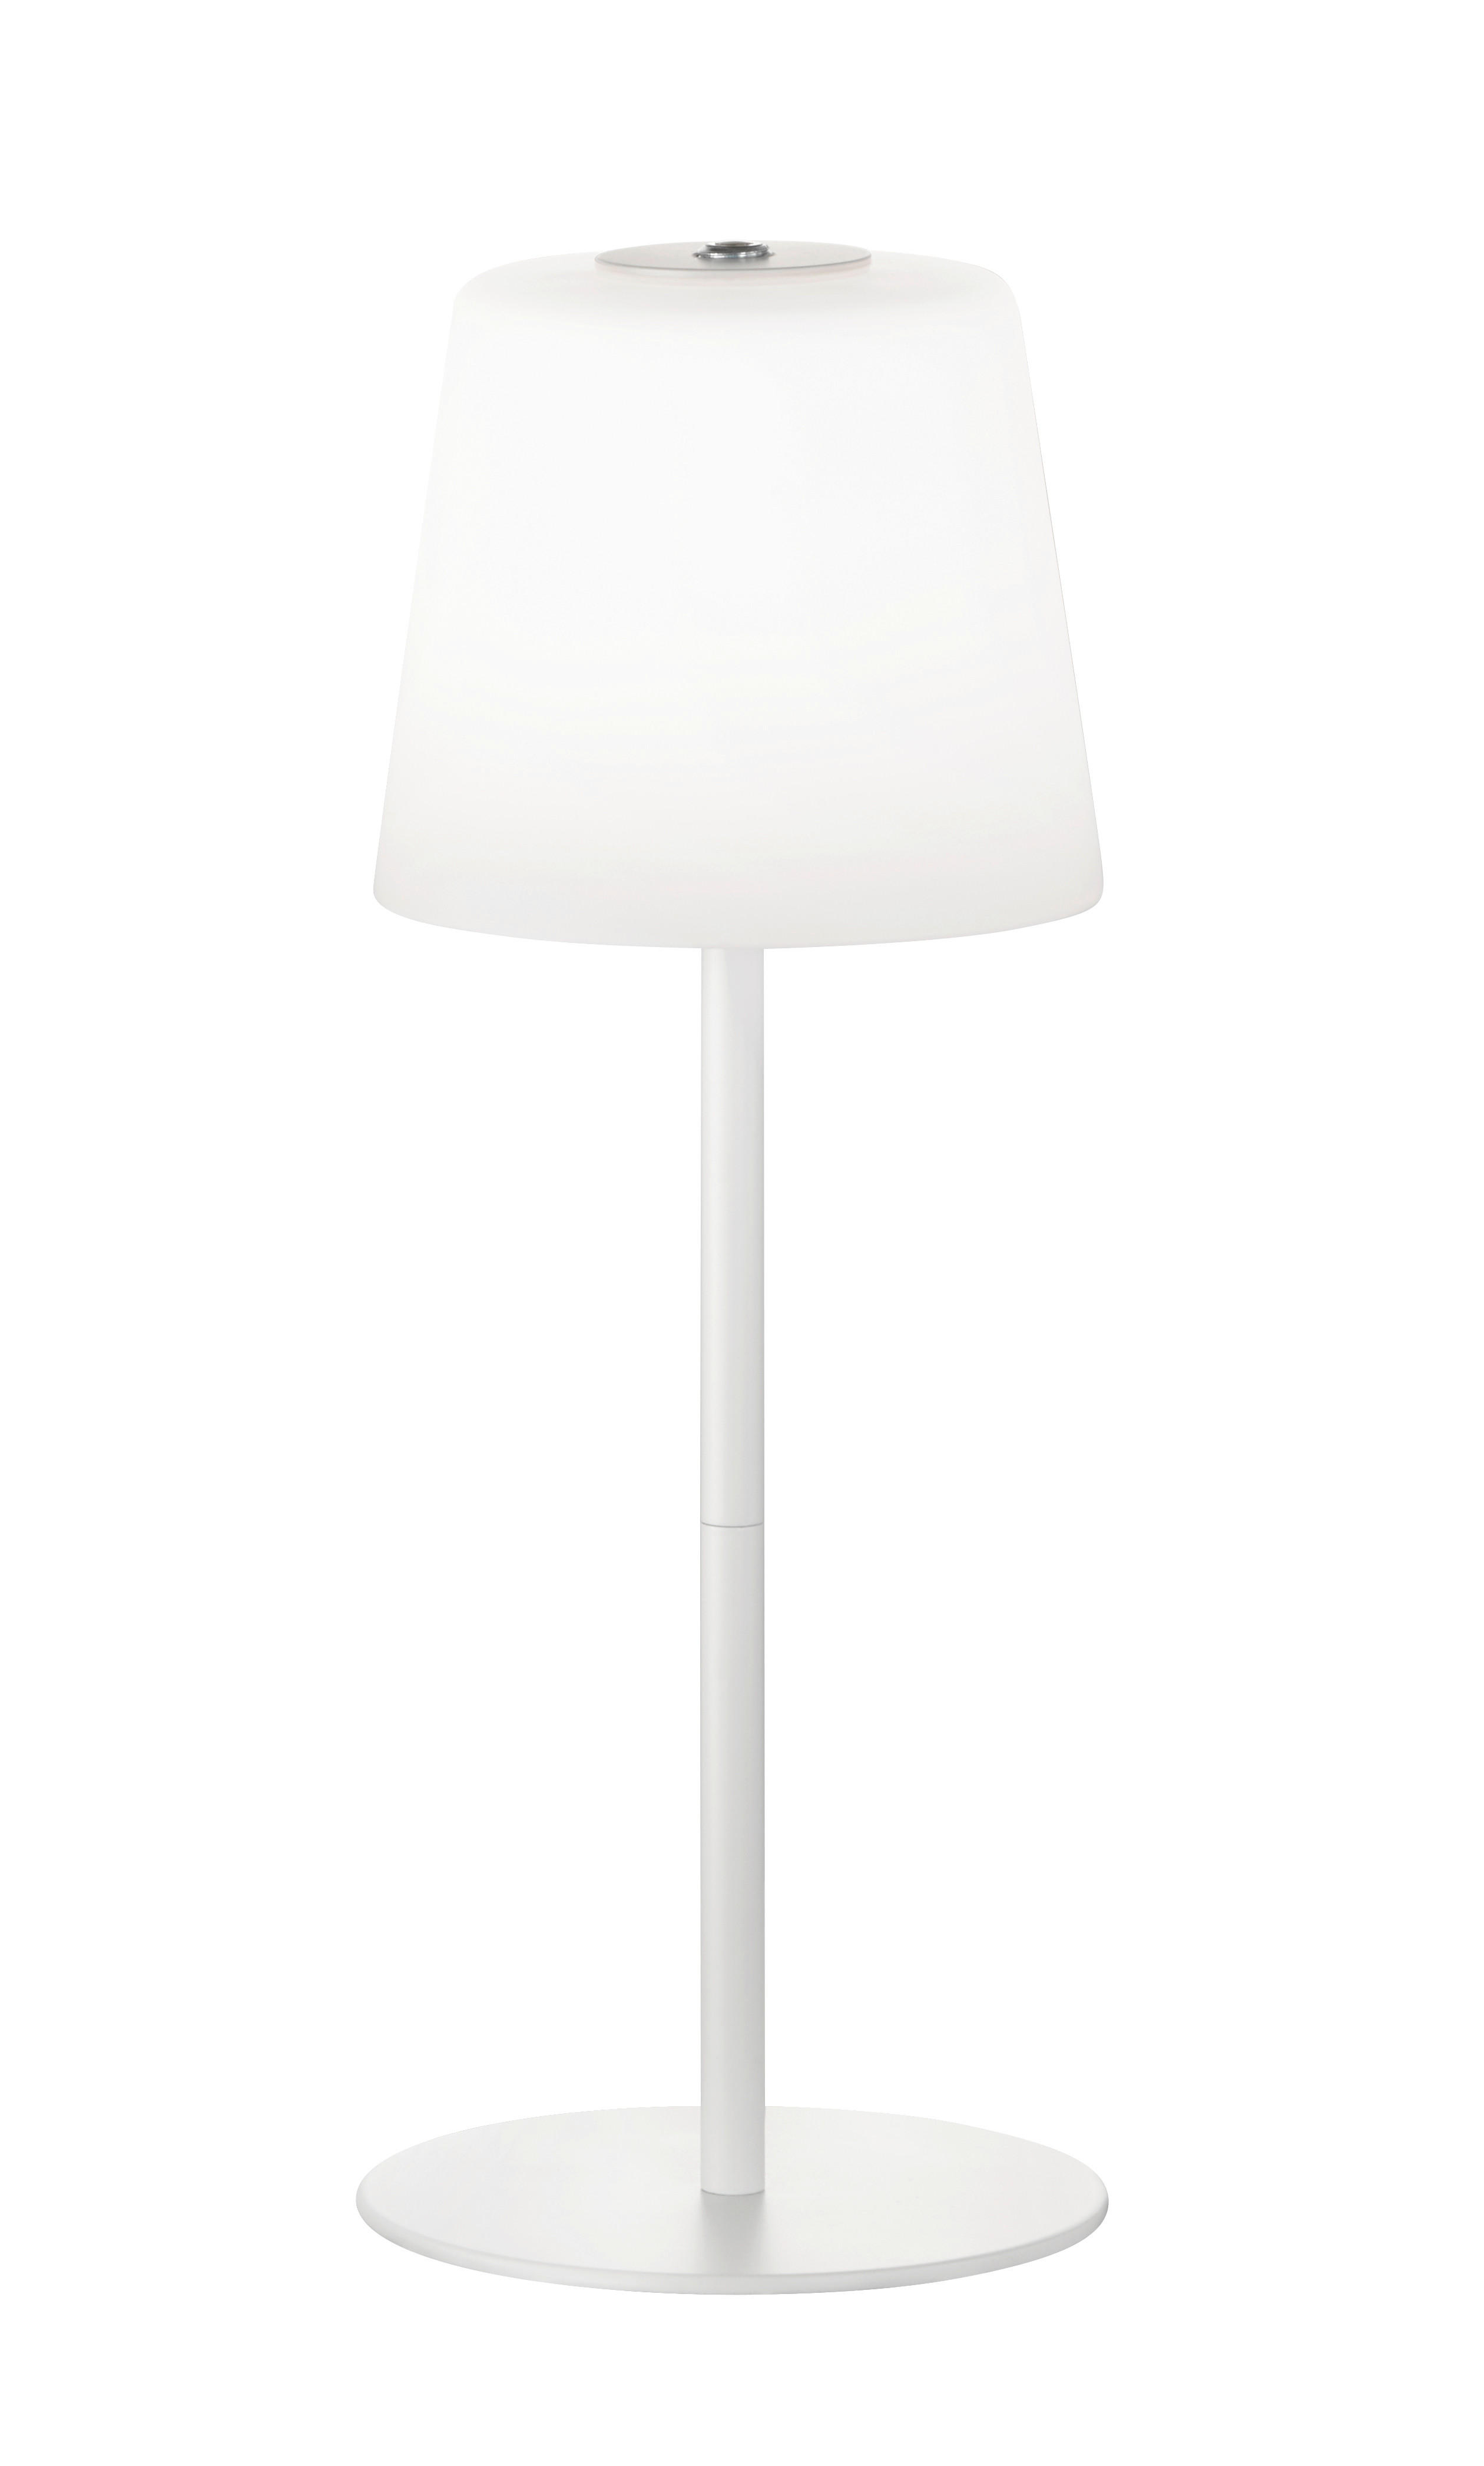 LED-TISCHLEUCHTE  - Weiß, Basics, Kunststoff/Metall (14/14/35cm) - Wofi